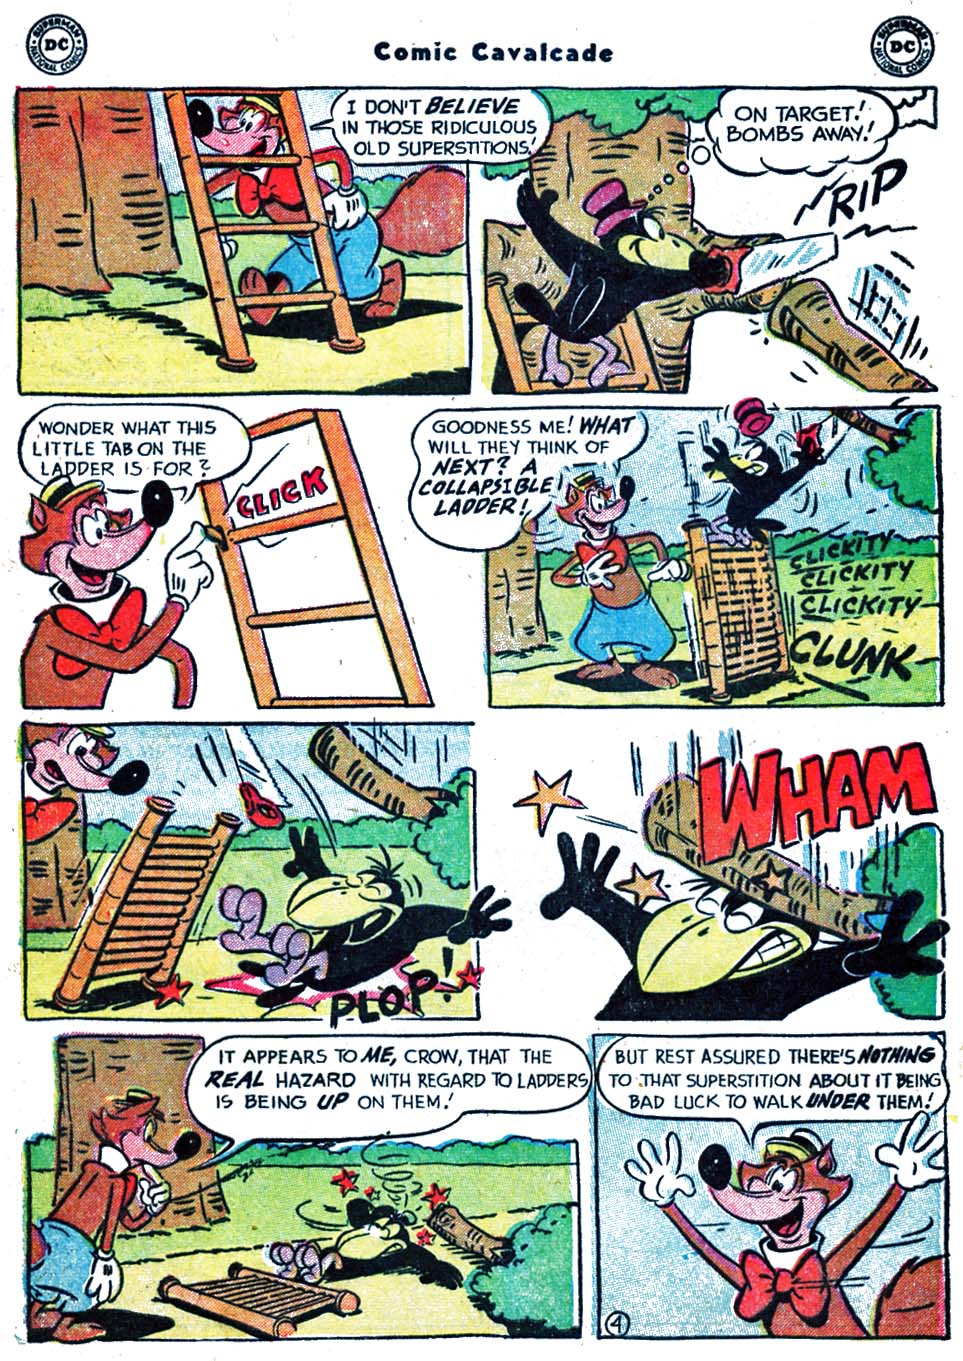 Comic Cavalcade issue 62 - Page 6